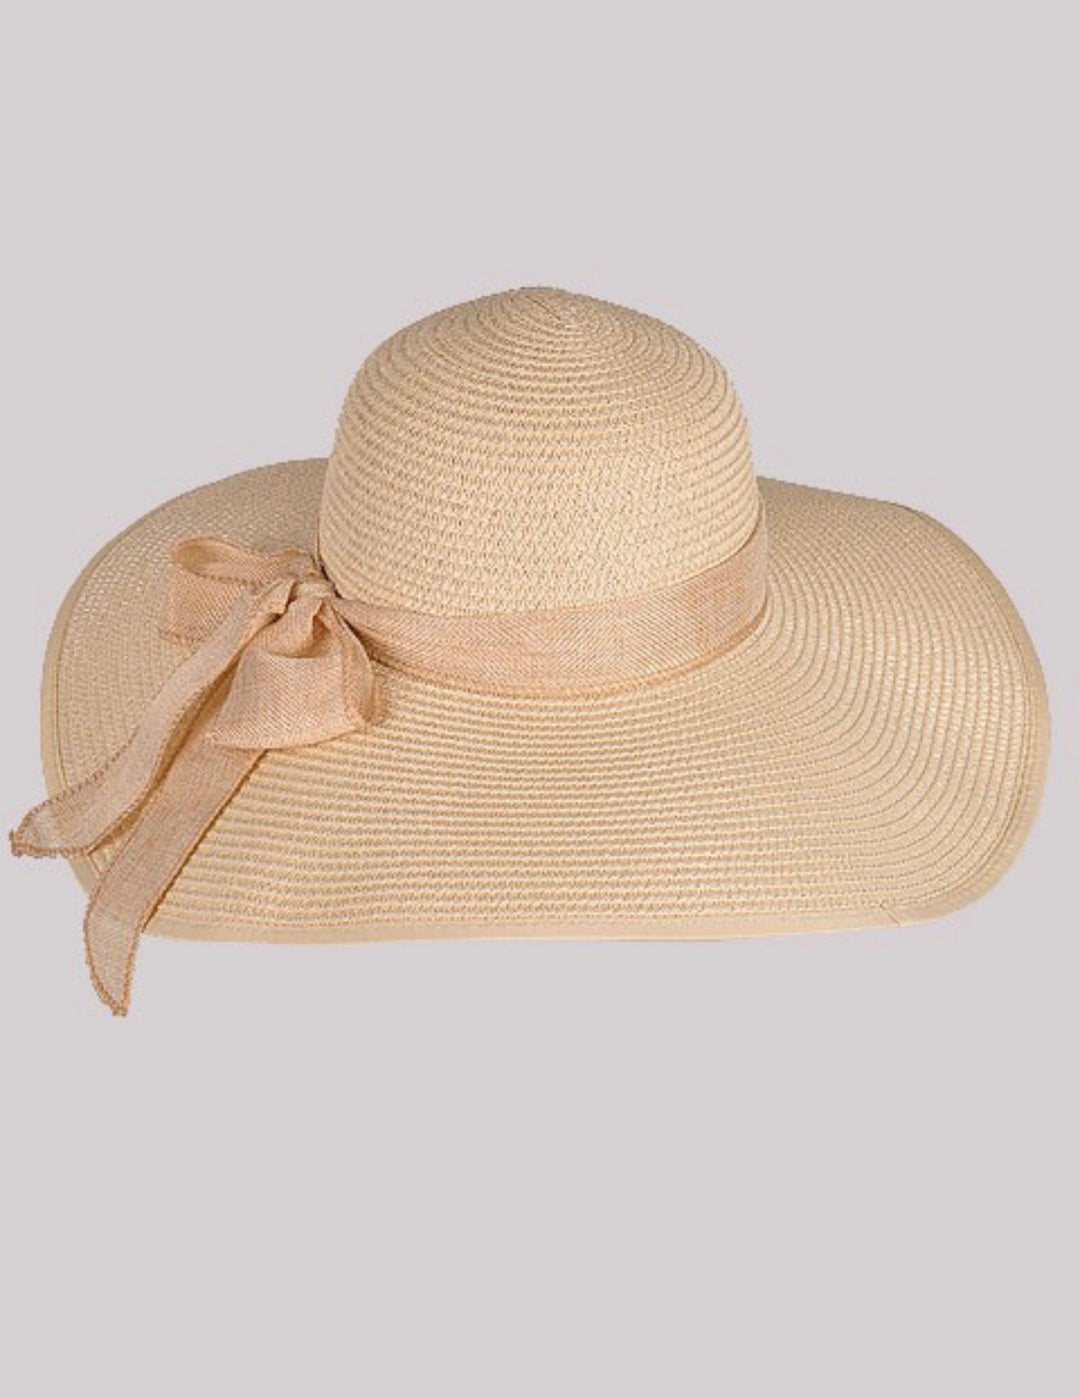 SUMMER BREEZE Woman's Sun Hat-Accessories-Malandra Boutique-Malandra Boutique, Women's Fashion Boutique Located in Las Vegas, NV